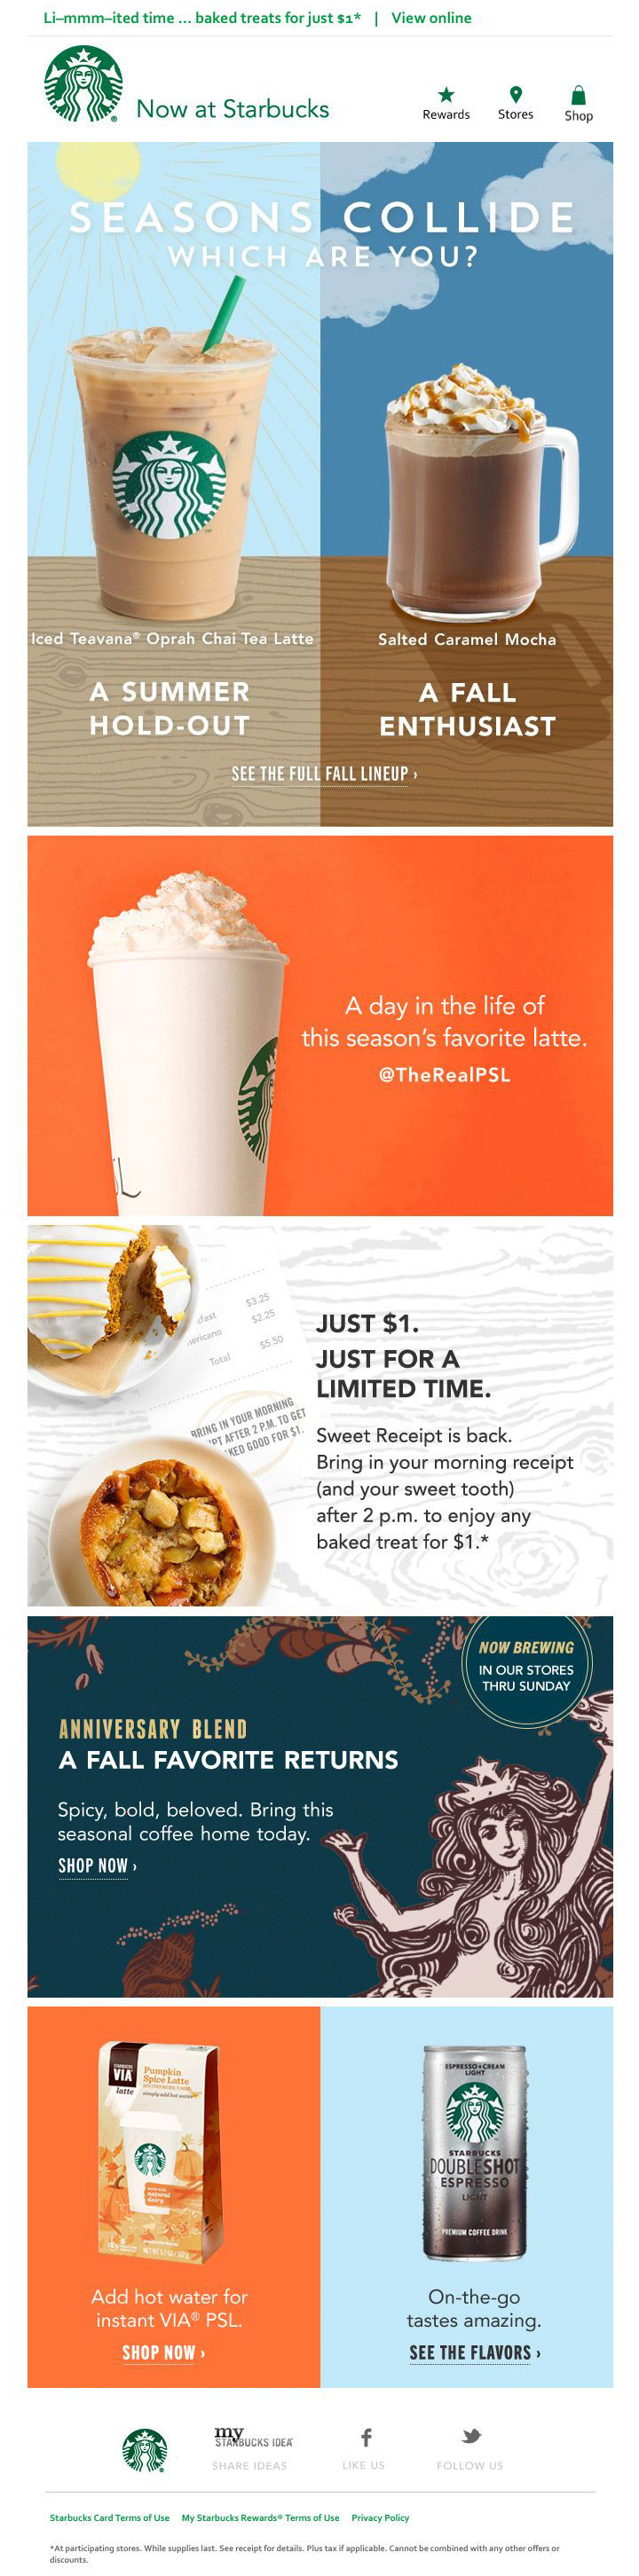 Starbucks Seasons Collide email